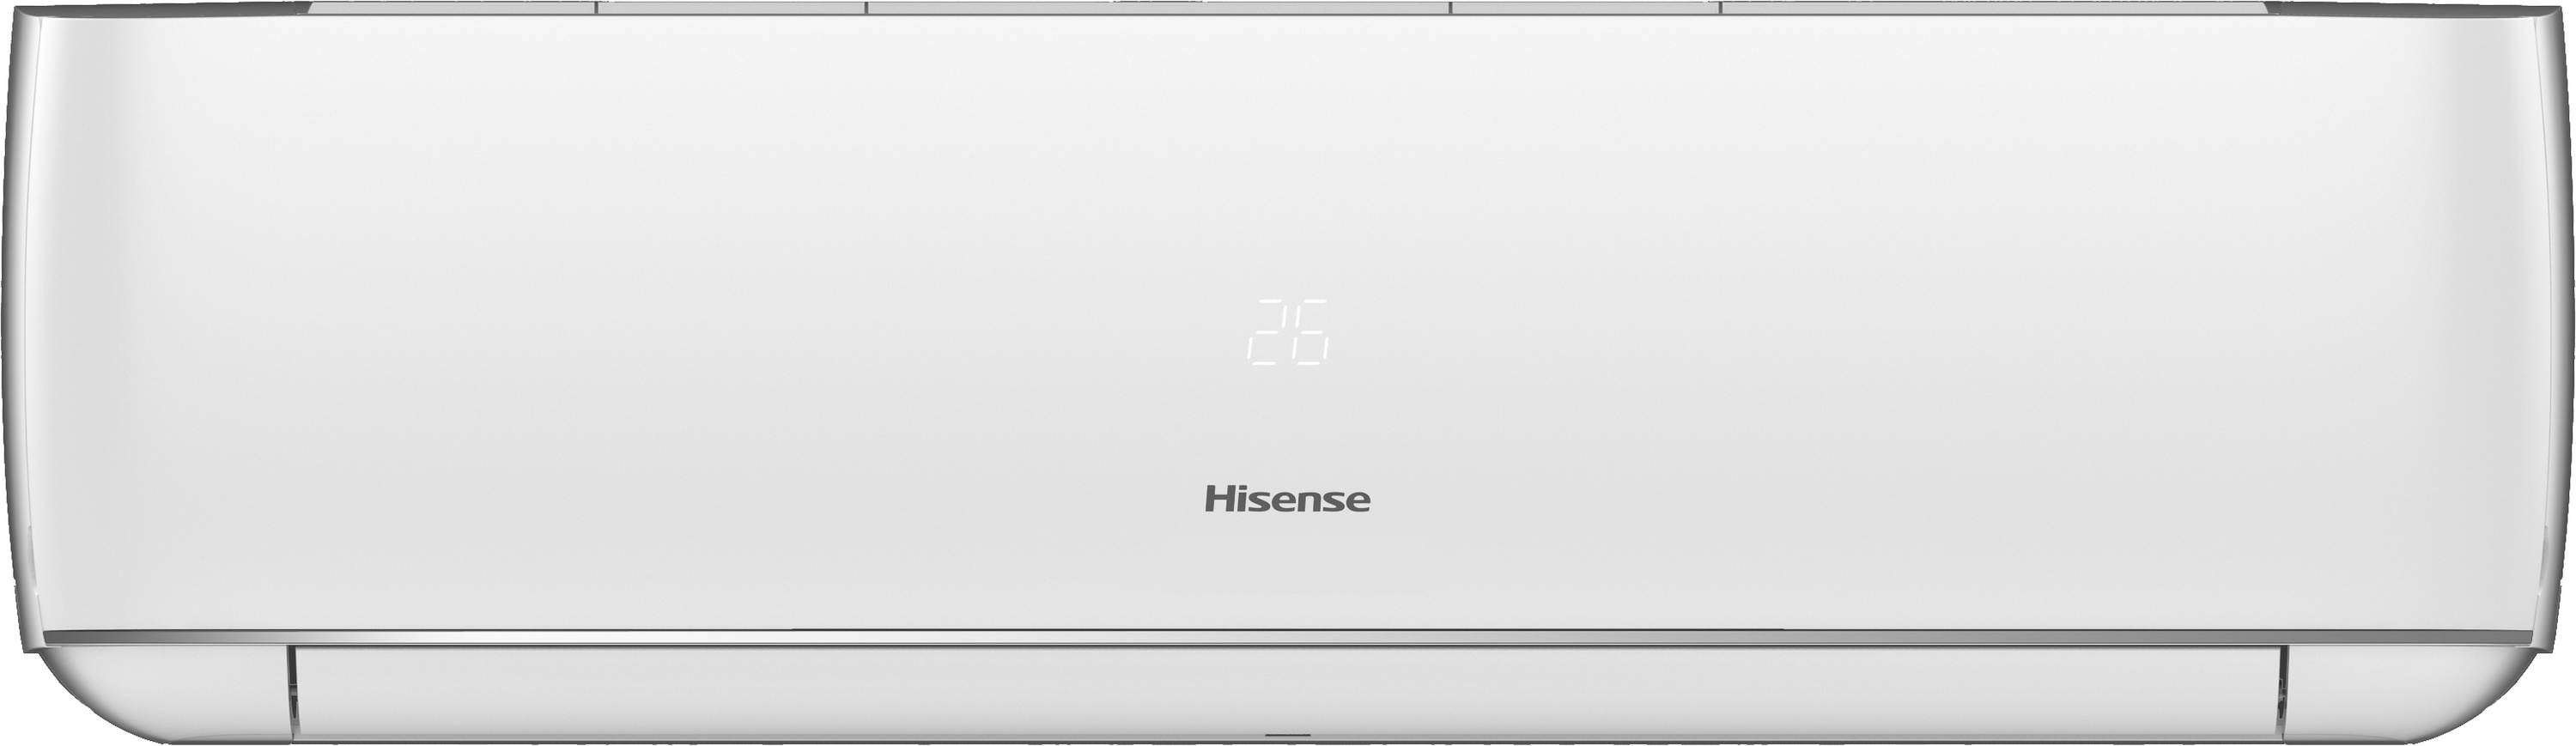 Кондиционер сплит-система Hisense Husky TV70DB0E цена 0.00 грн - фотография 2